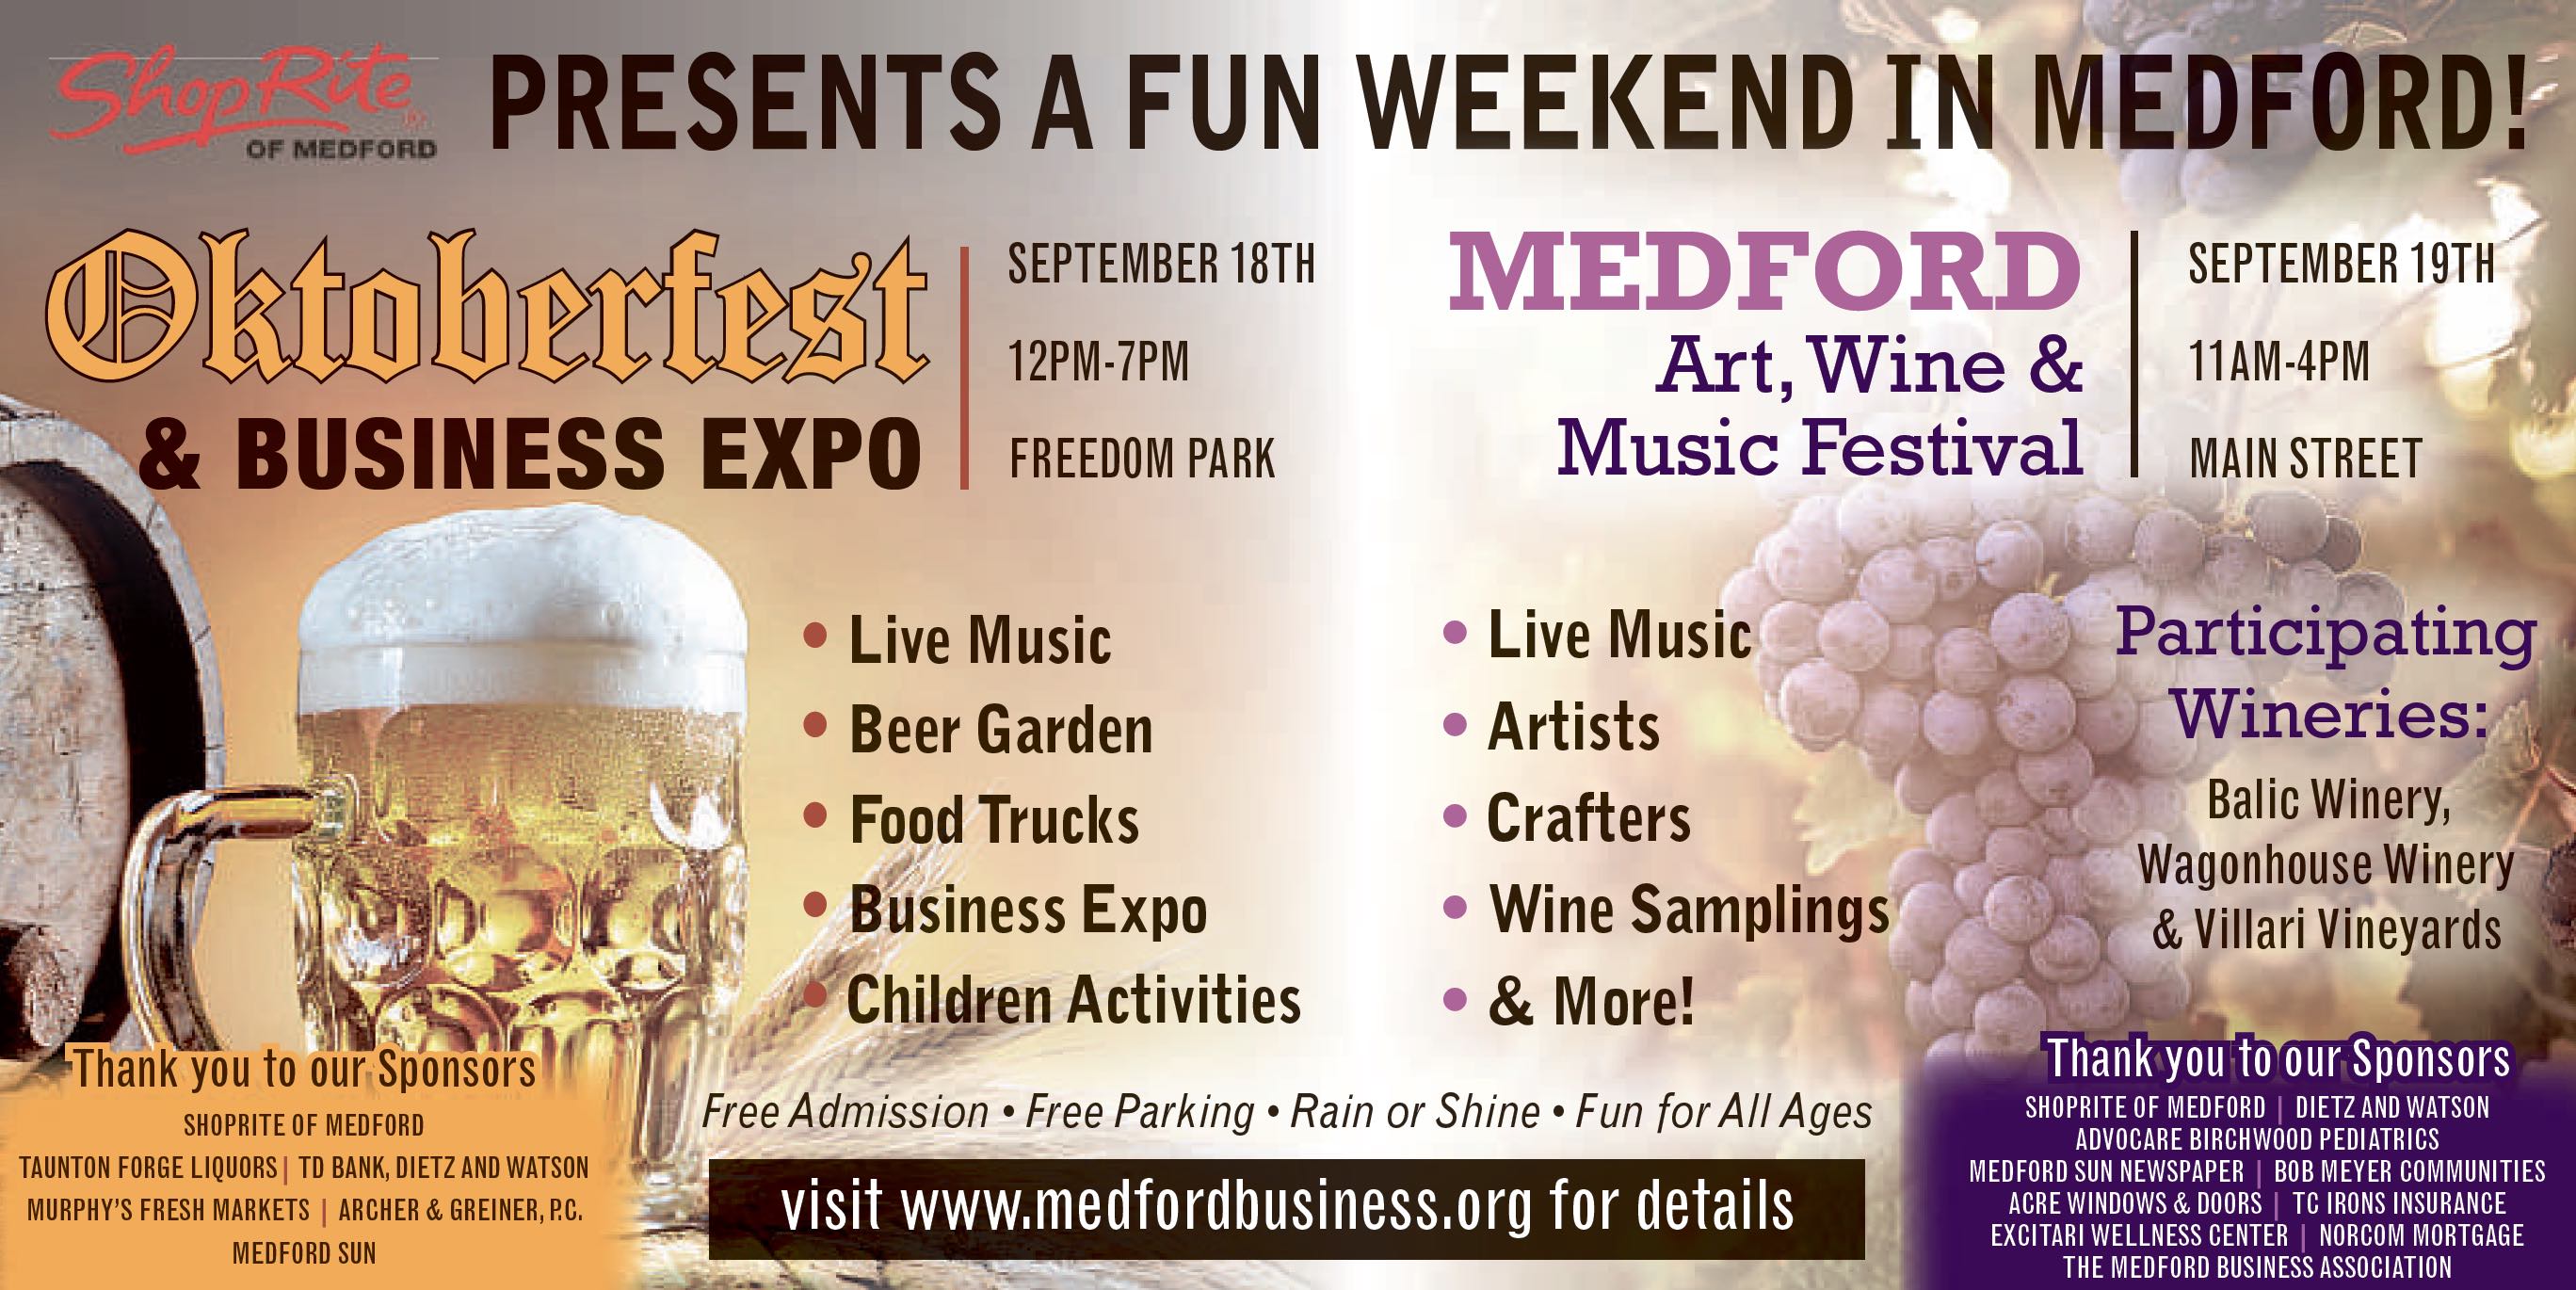 Medford Weekend of Fun September 18th-19th